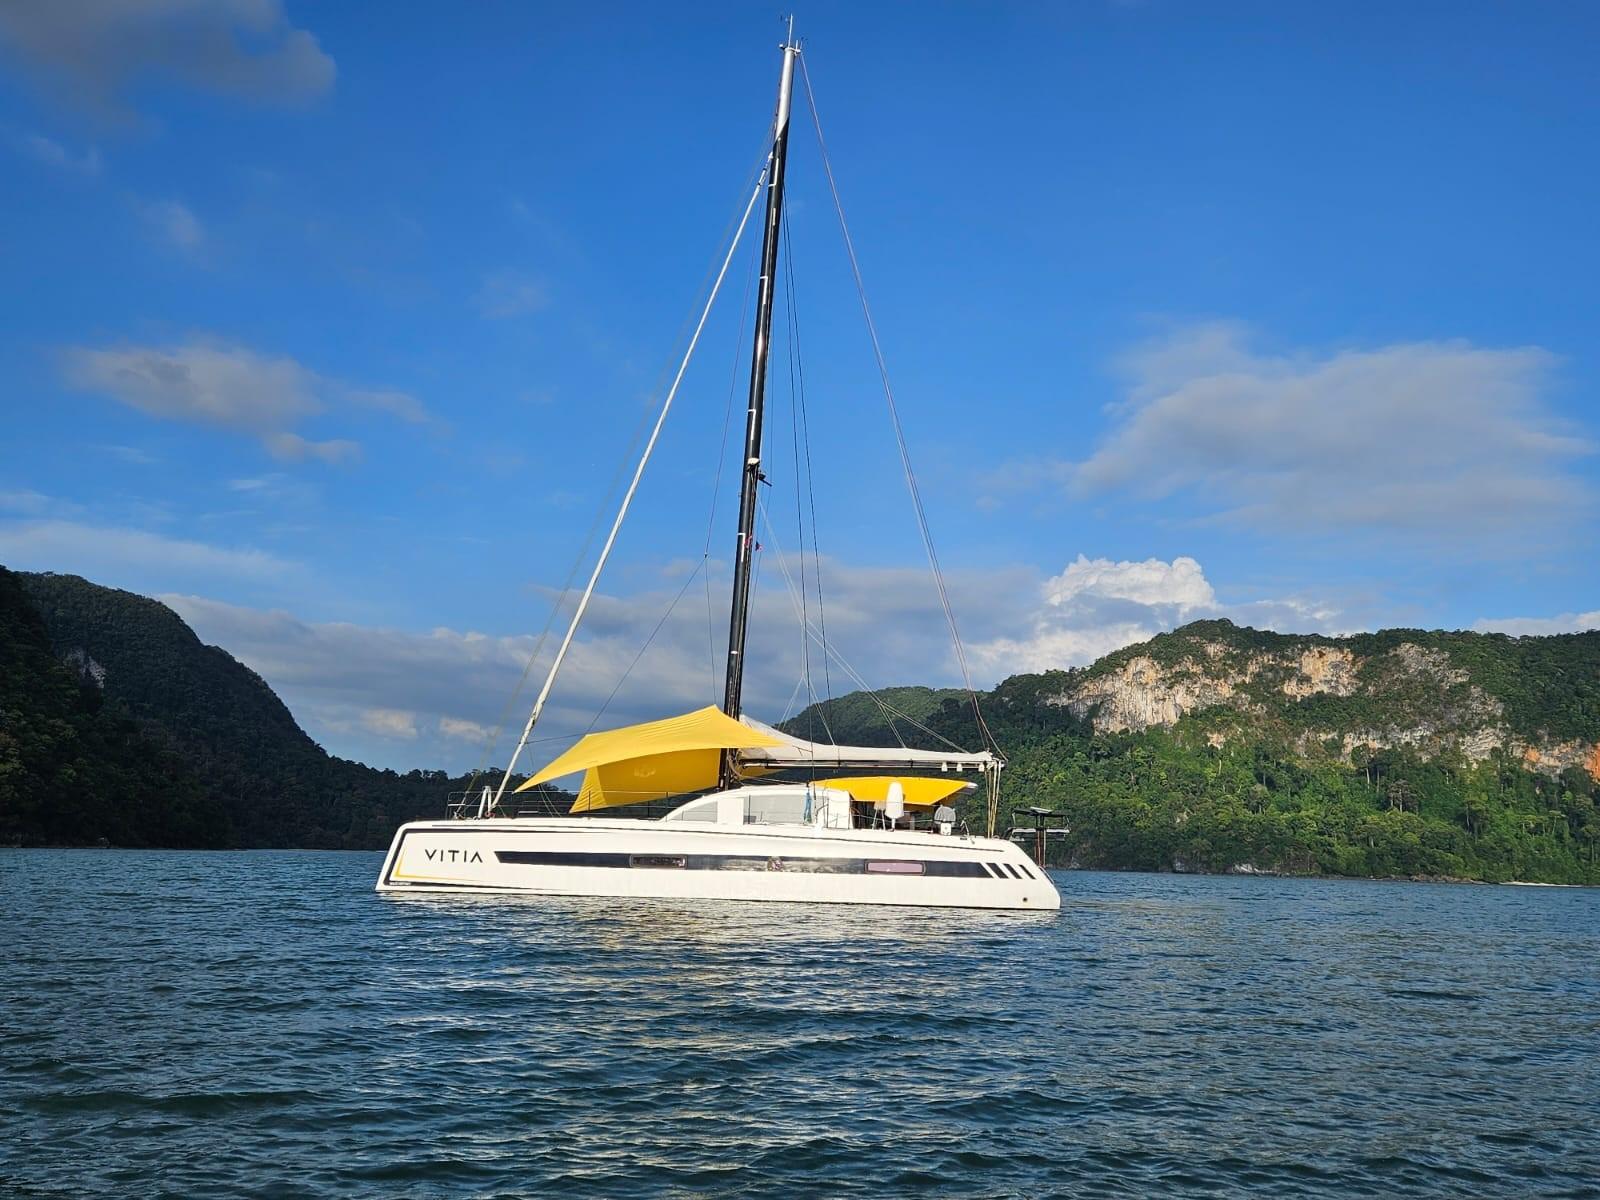 used catamaran for sale in europe